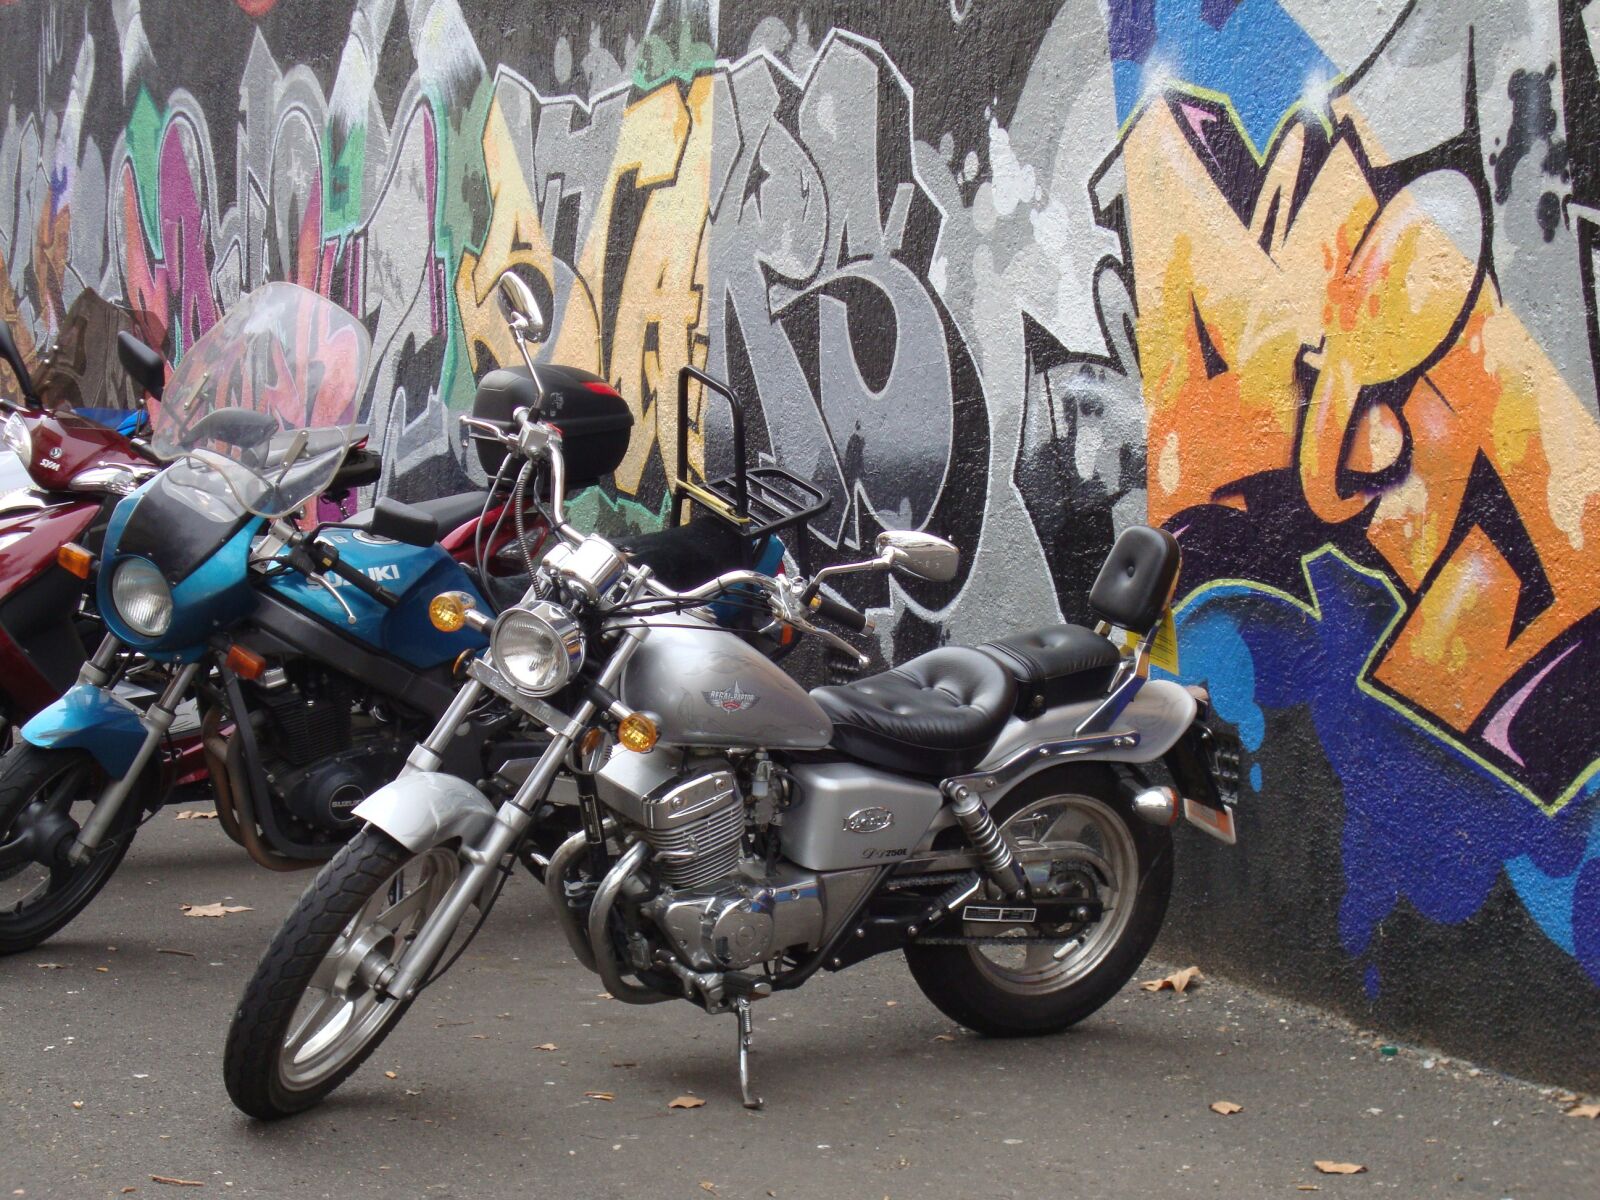 Sony DSC-W230 sample photo. Motor bikes, graffiti, motorcycle photography